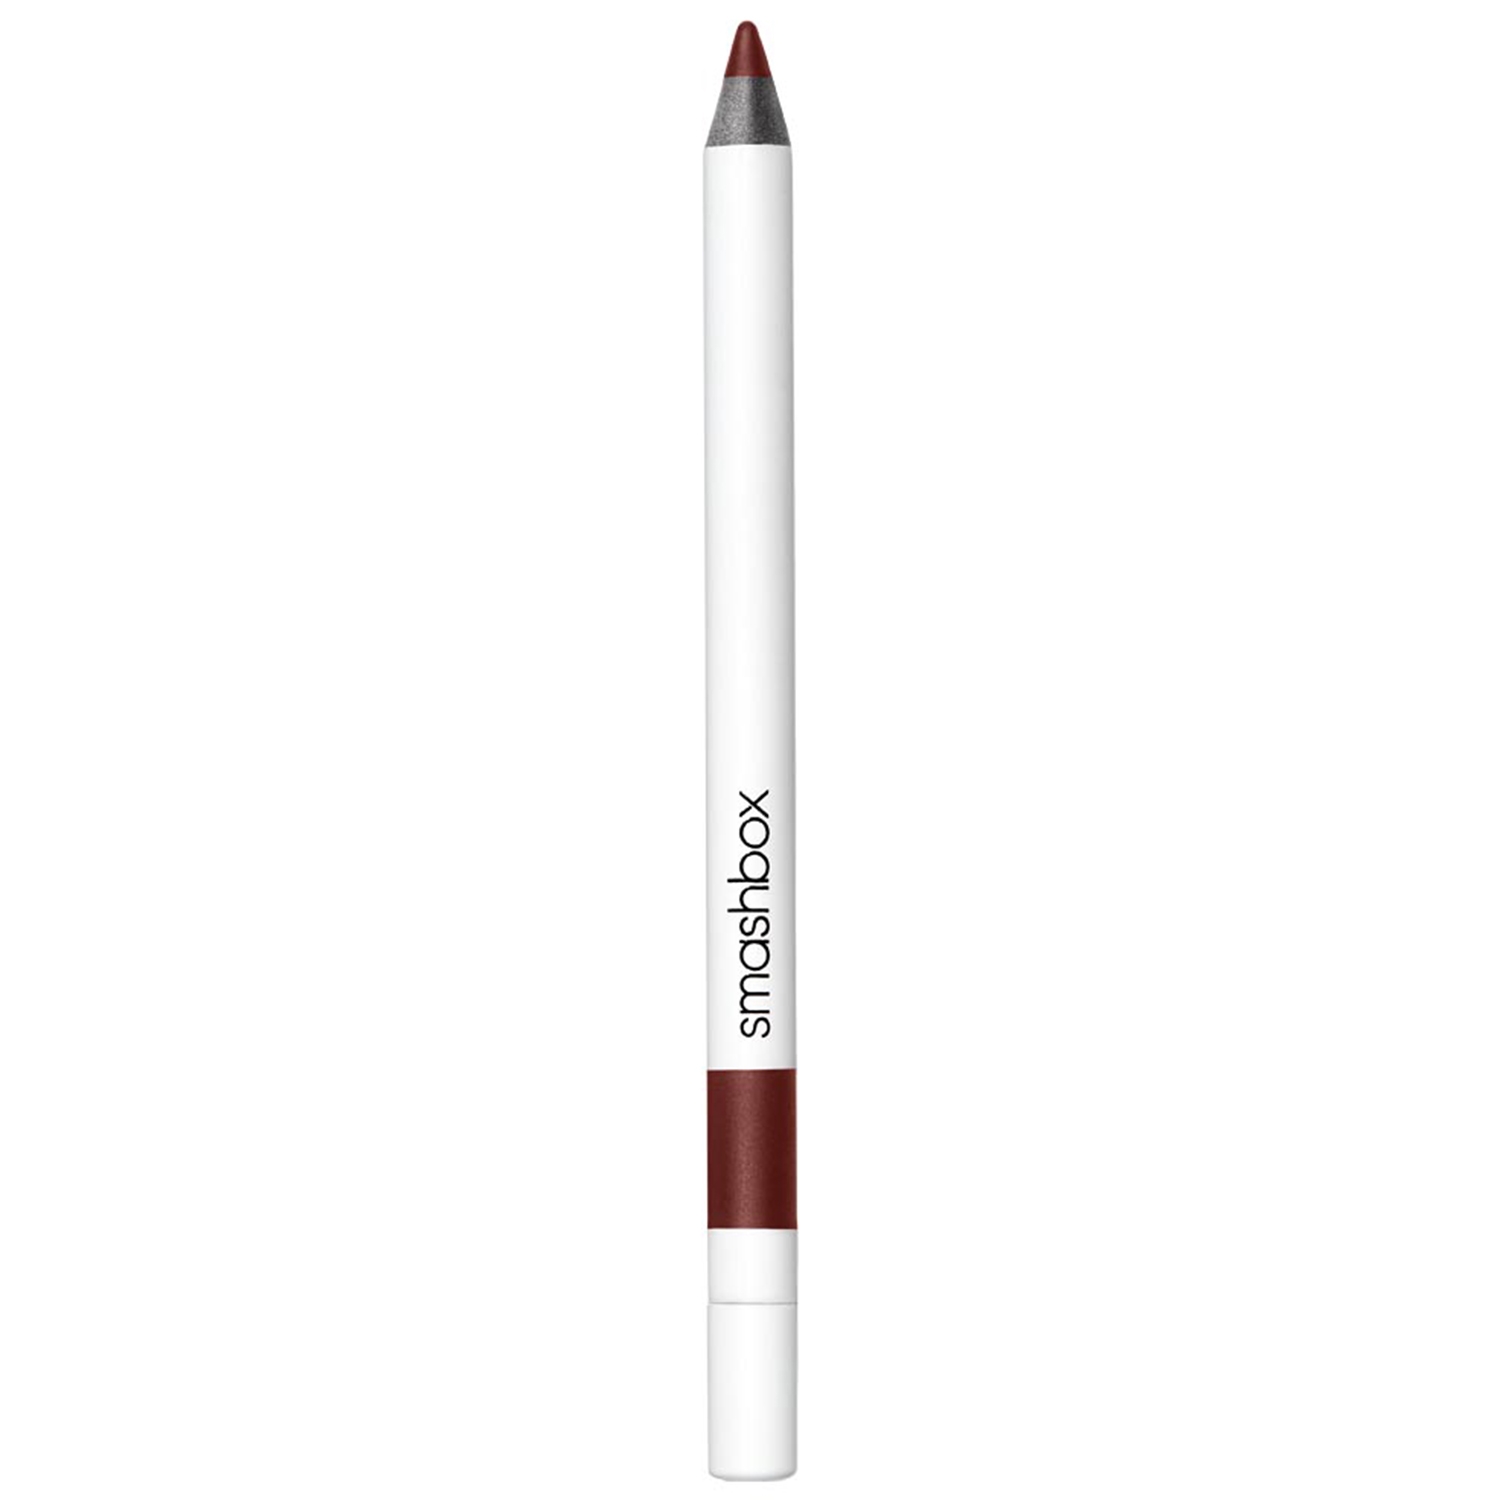 Smashbox Be Legendary Line & Prime Pencil - Dark Reddish Brown (1.20g)